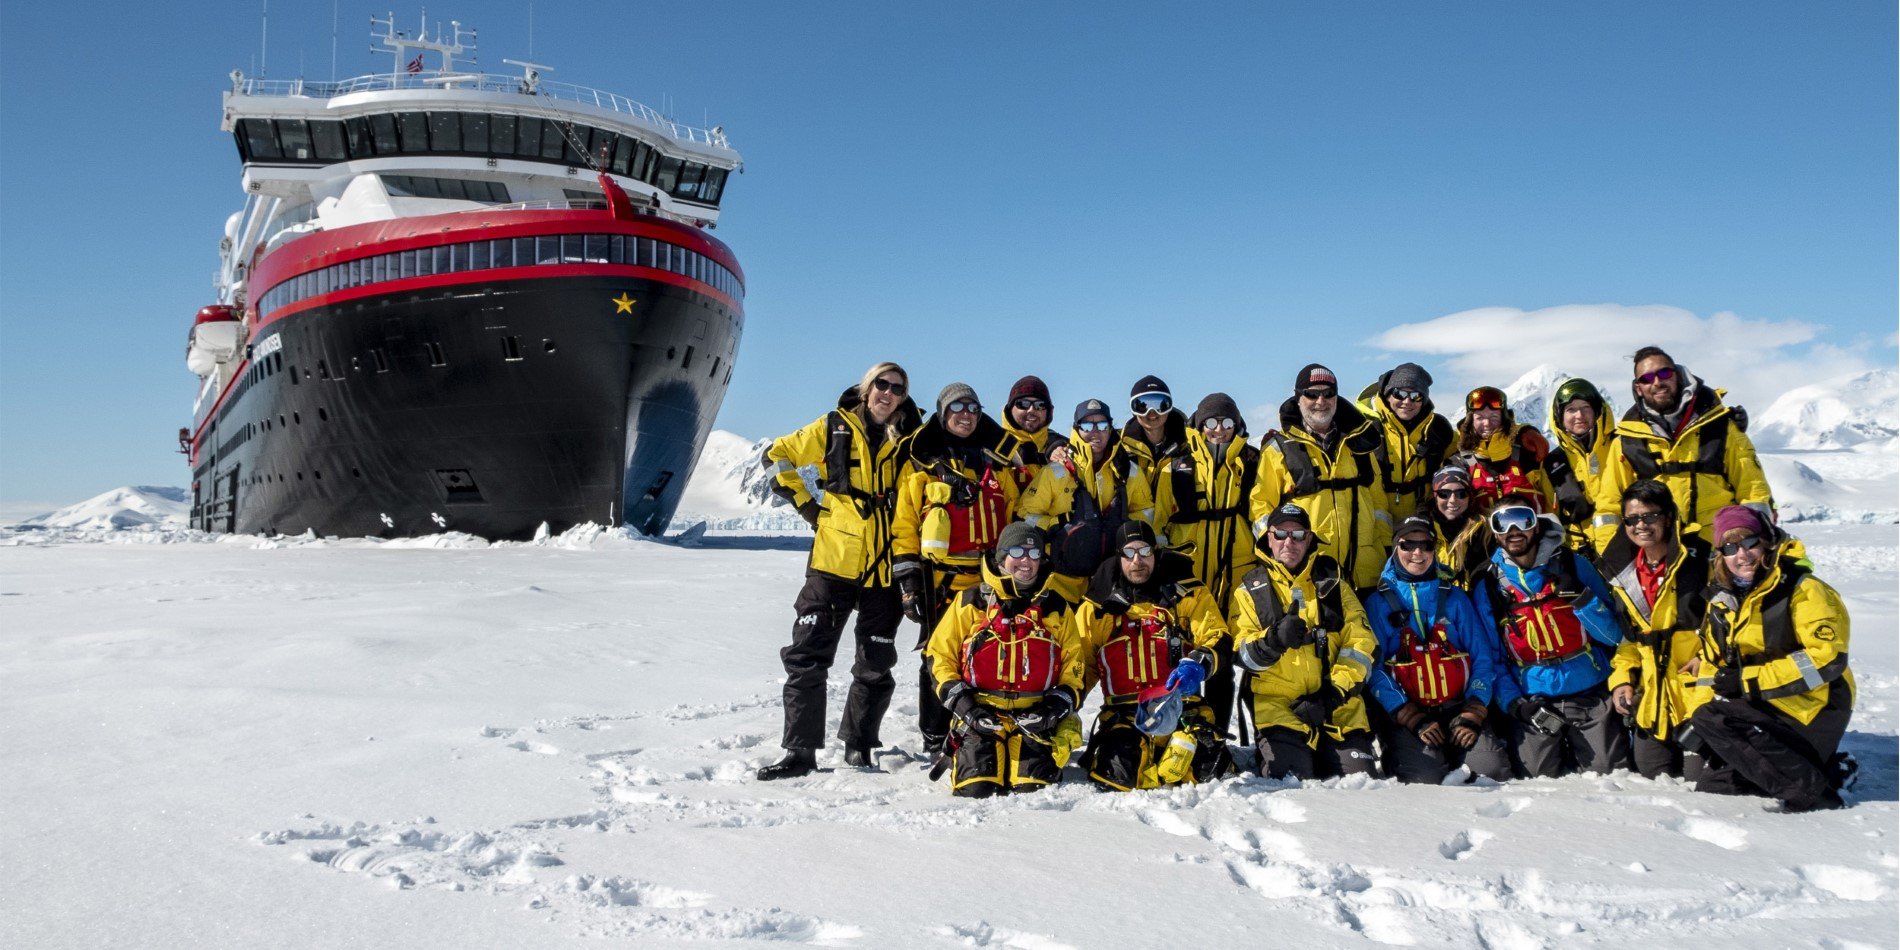 Landing with MS Roald Amundsen's expedition team in Antarctica